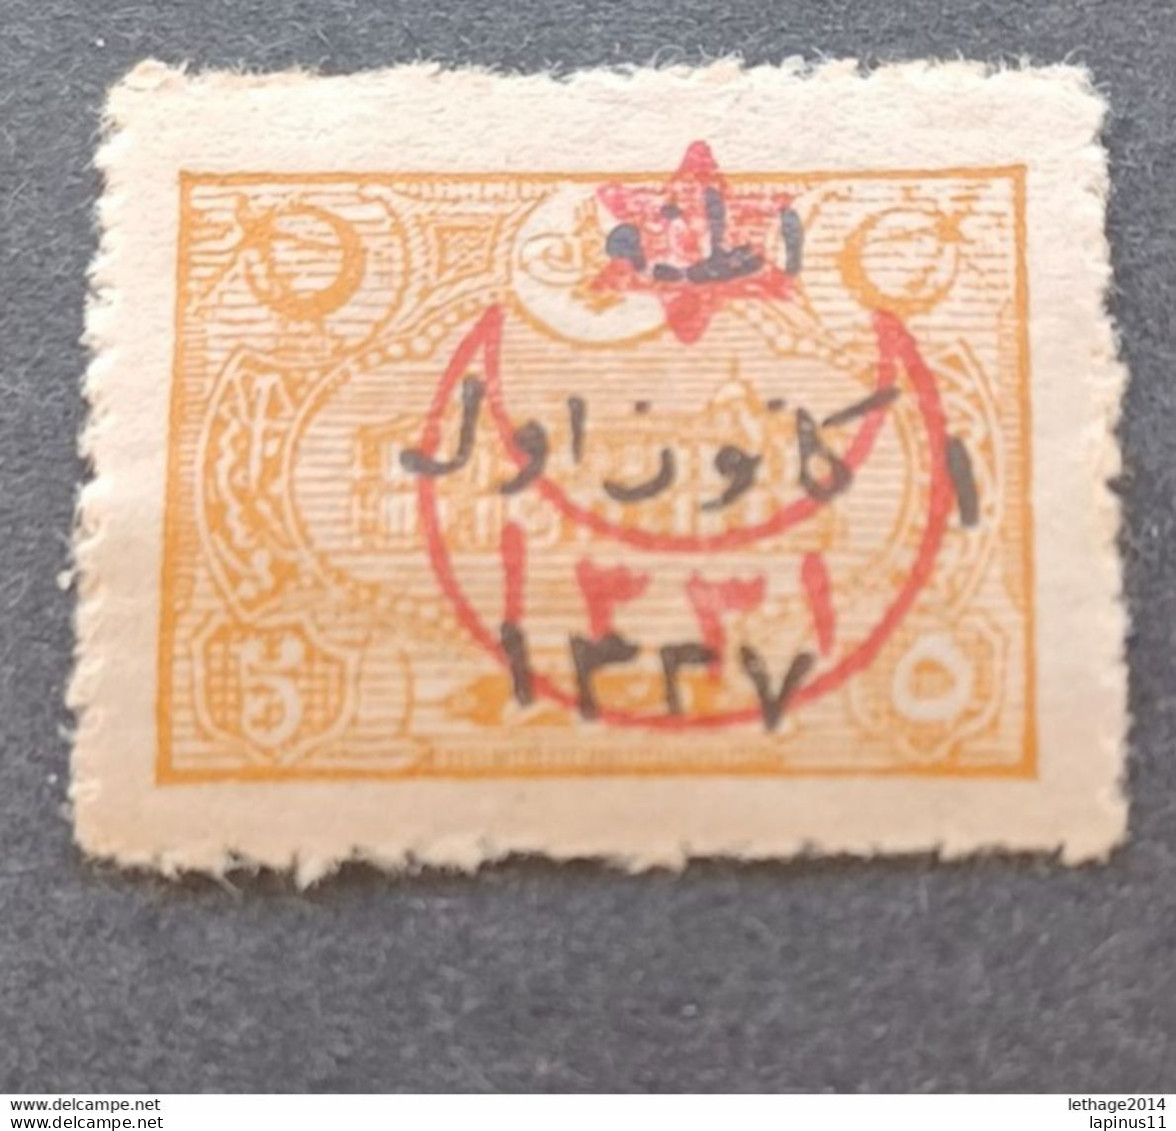 TURKEY OTTOMAN العثماني التركي Türkiye 1921 POSTAL PALACE ISTANBUL ADANA ISSUE CAT. UNIF. 631 (266) MNH - Unused Stamps